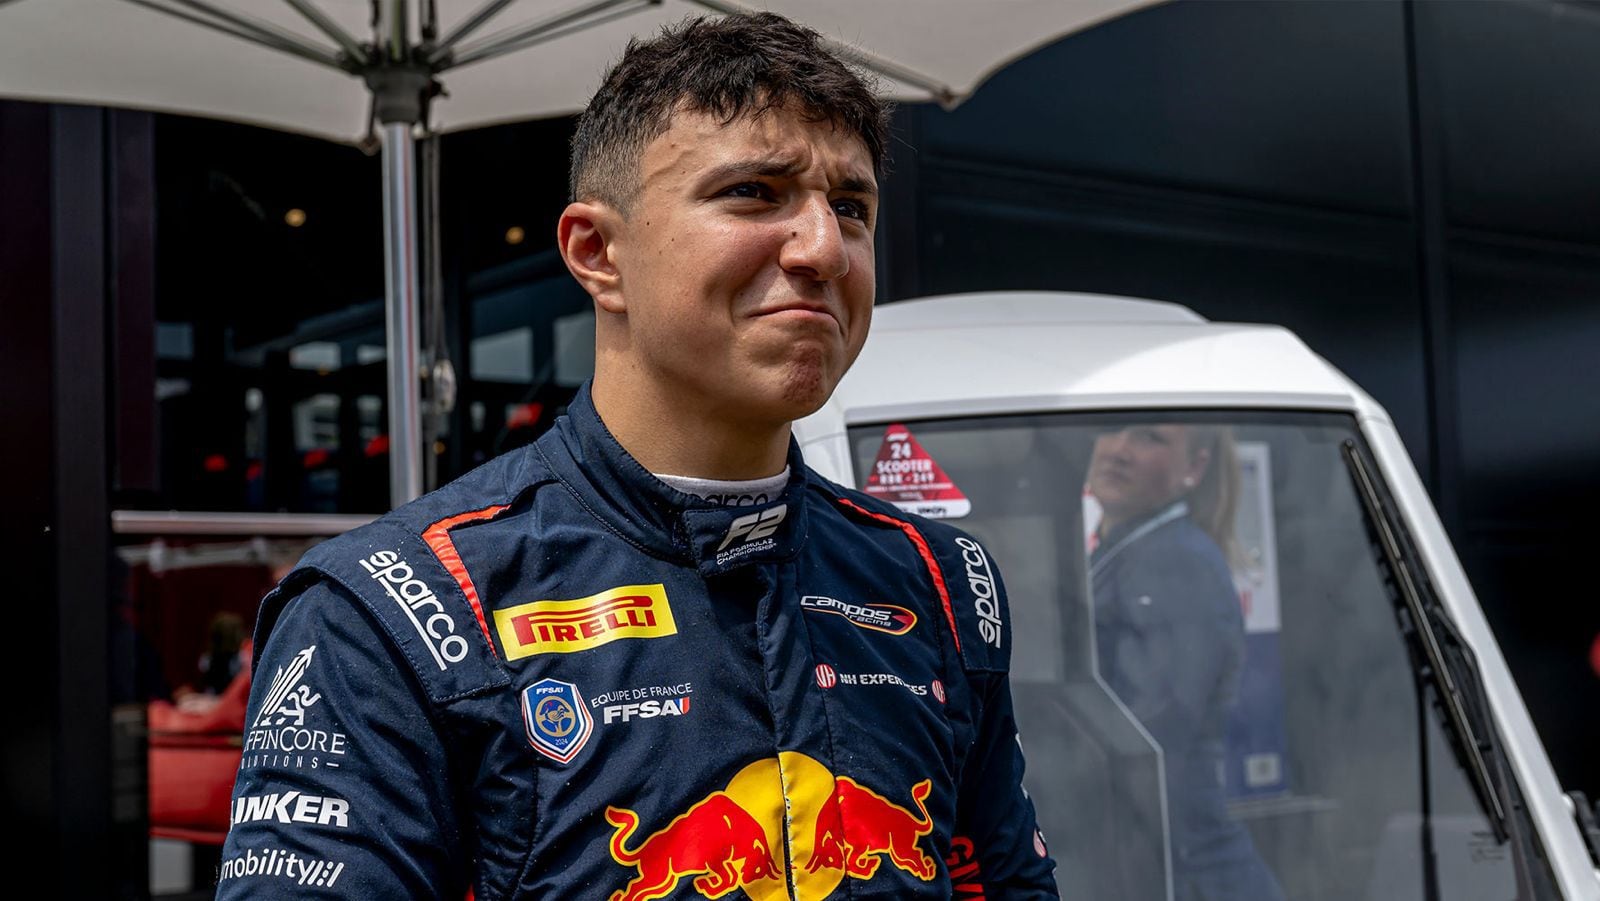 Isack Hadjar, piloto junior de Red Bull. (Foto: Michael Potts F1 / Shutterstock.com).